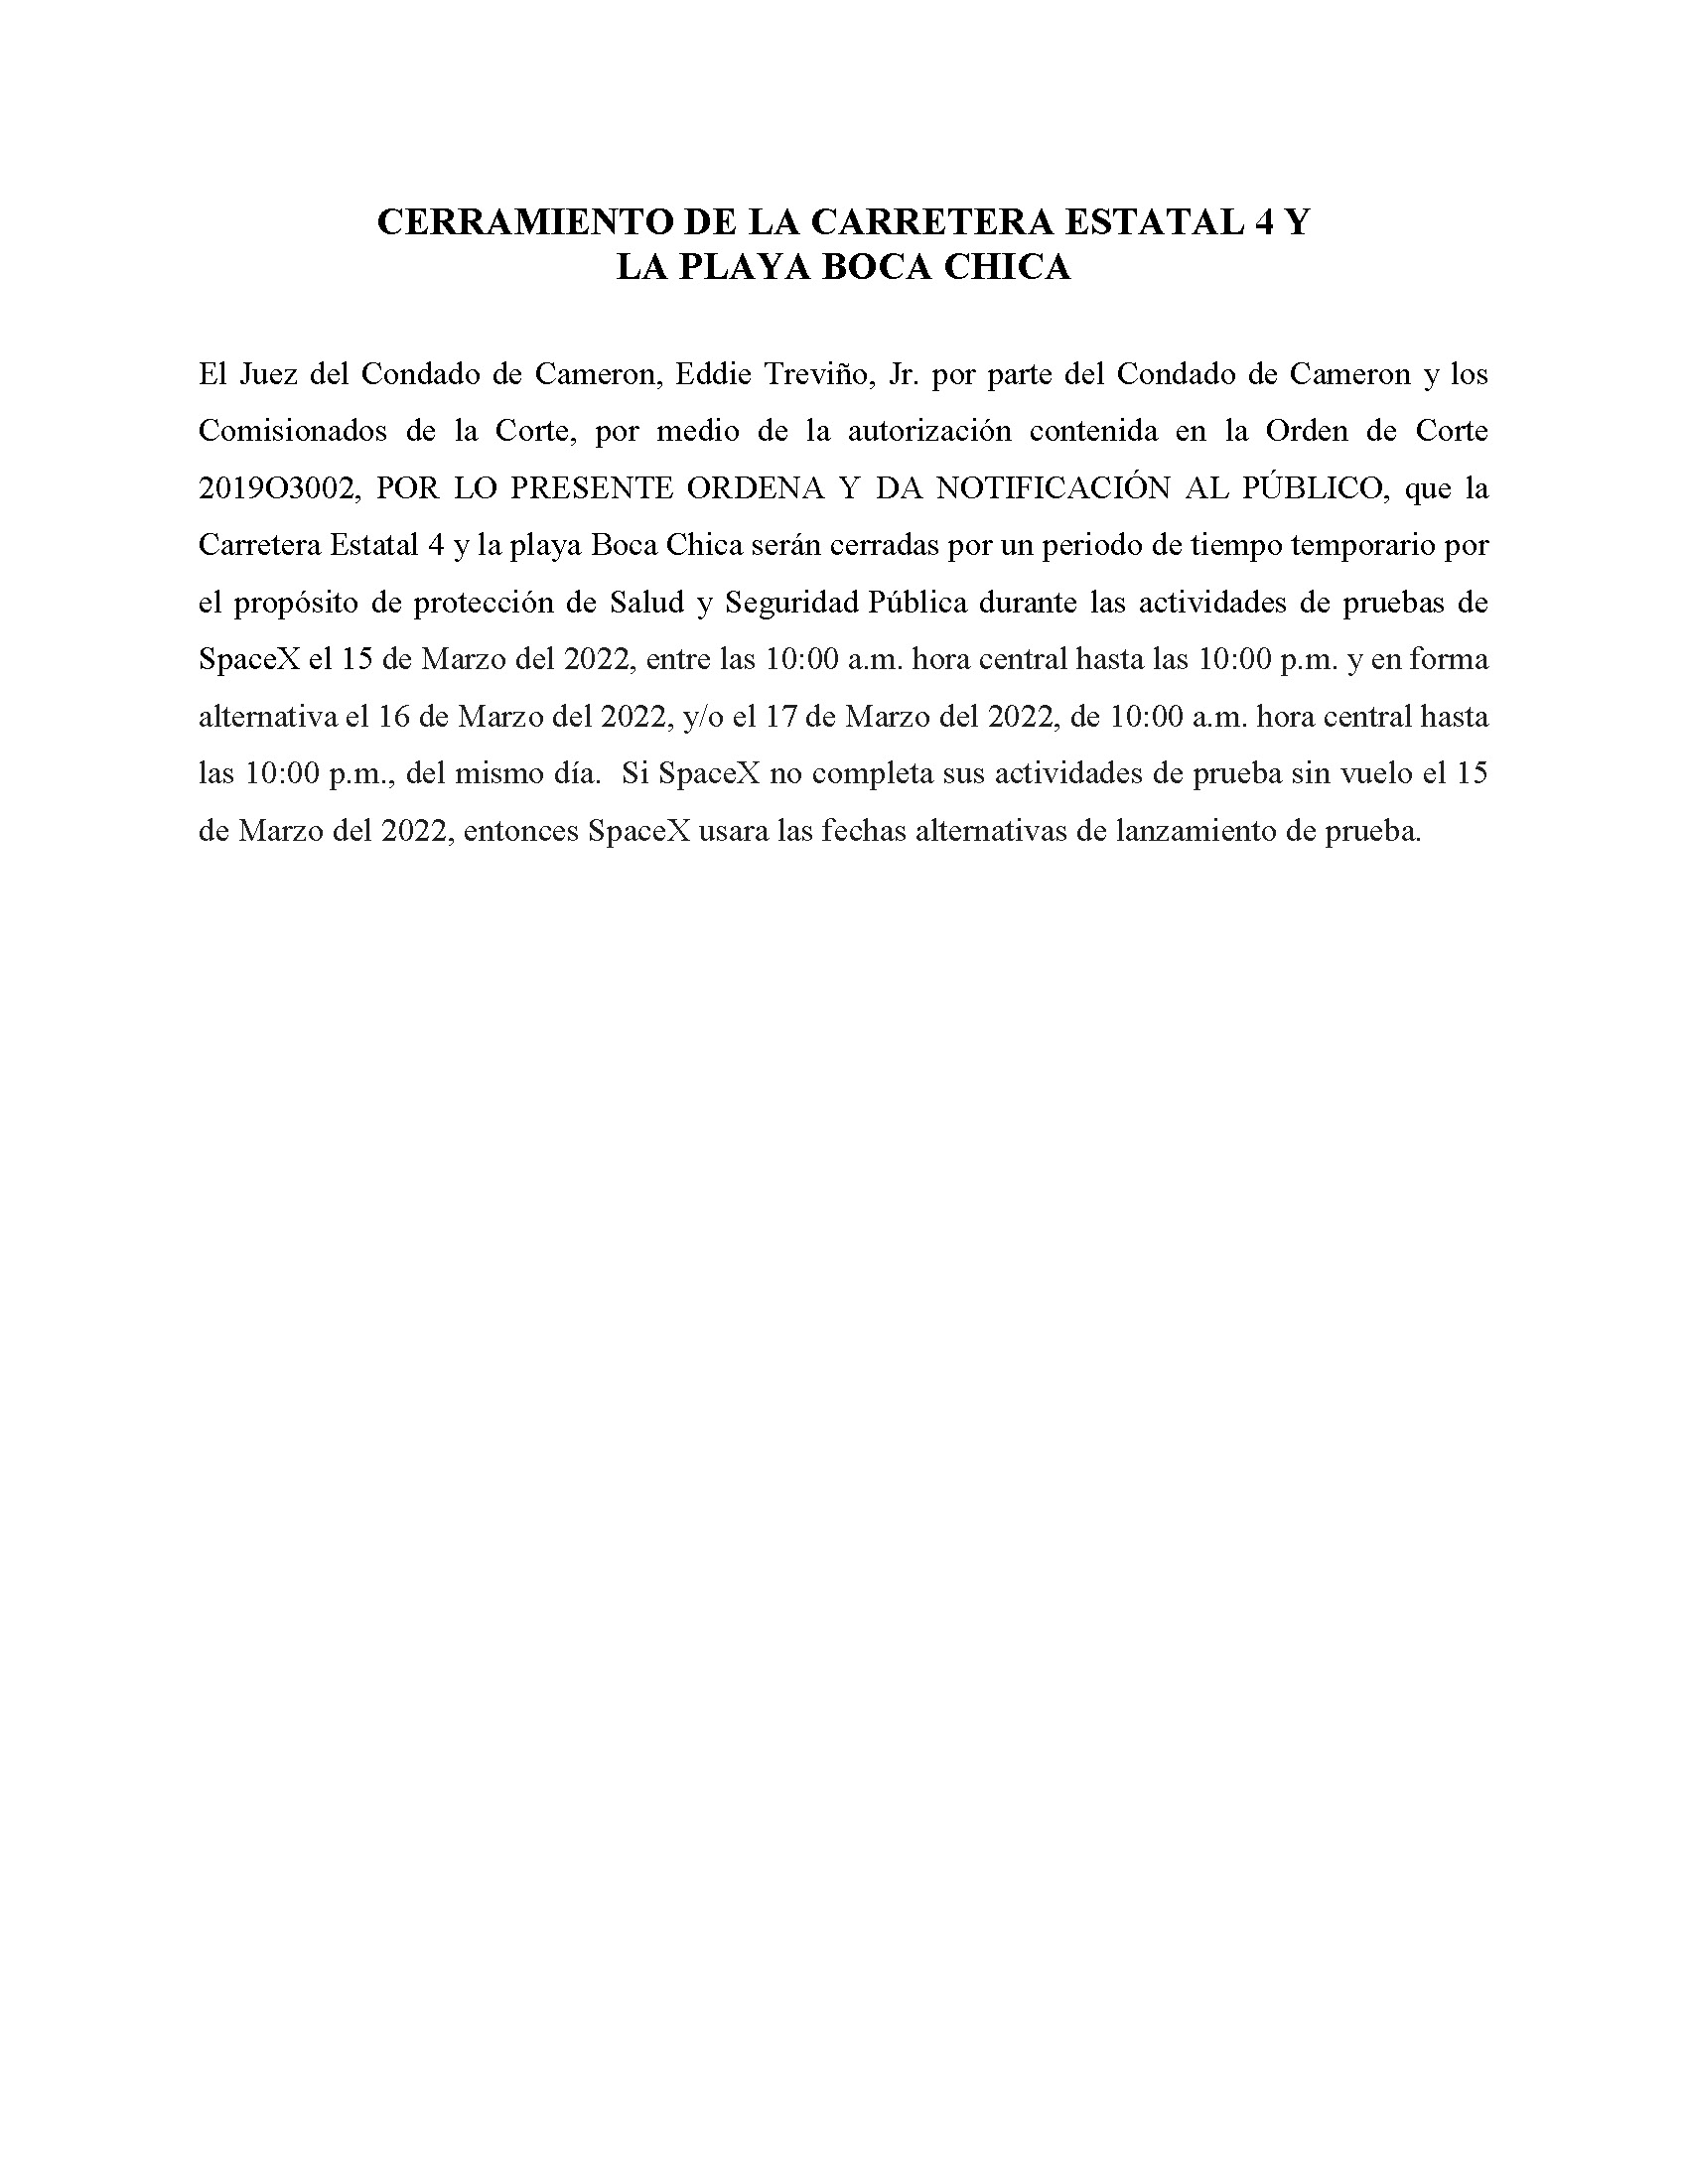 ORDER.CLOSURE OF HIGHWAY 4 Y LA PLAYA BOCA CHICA.SPANISH.03.15.2022